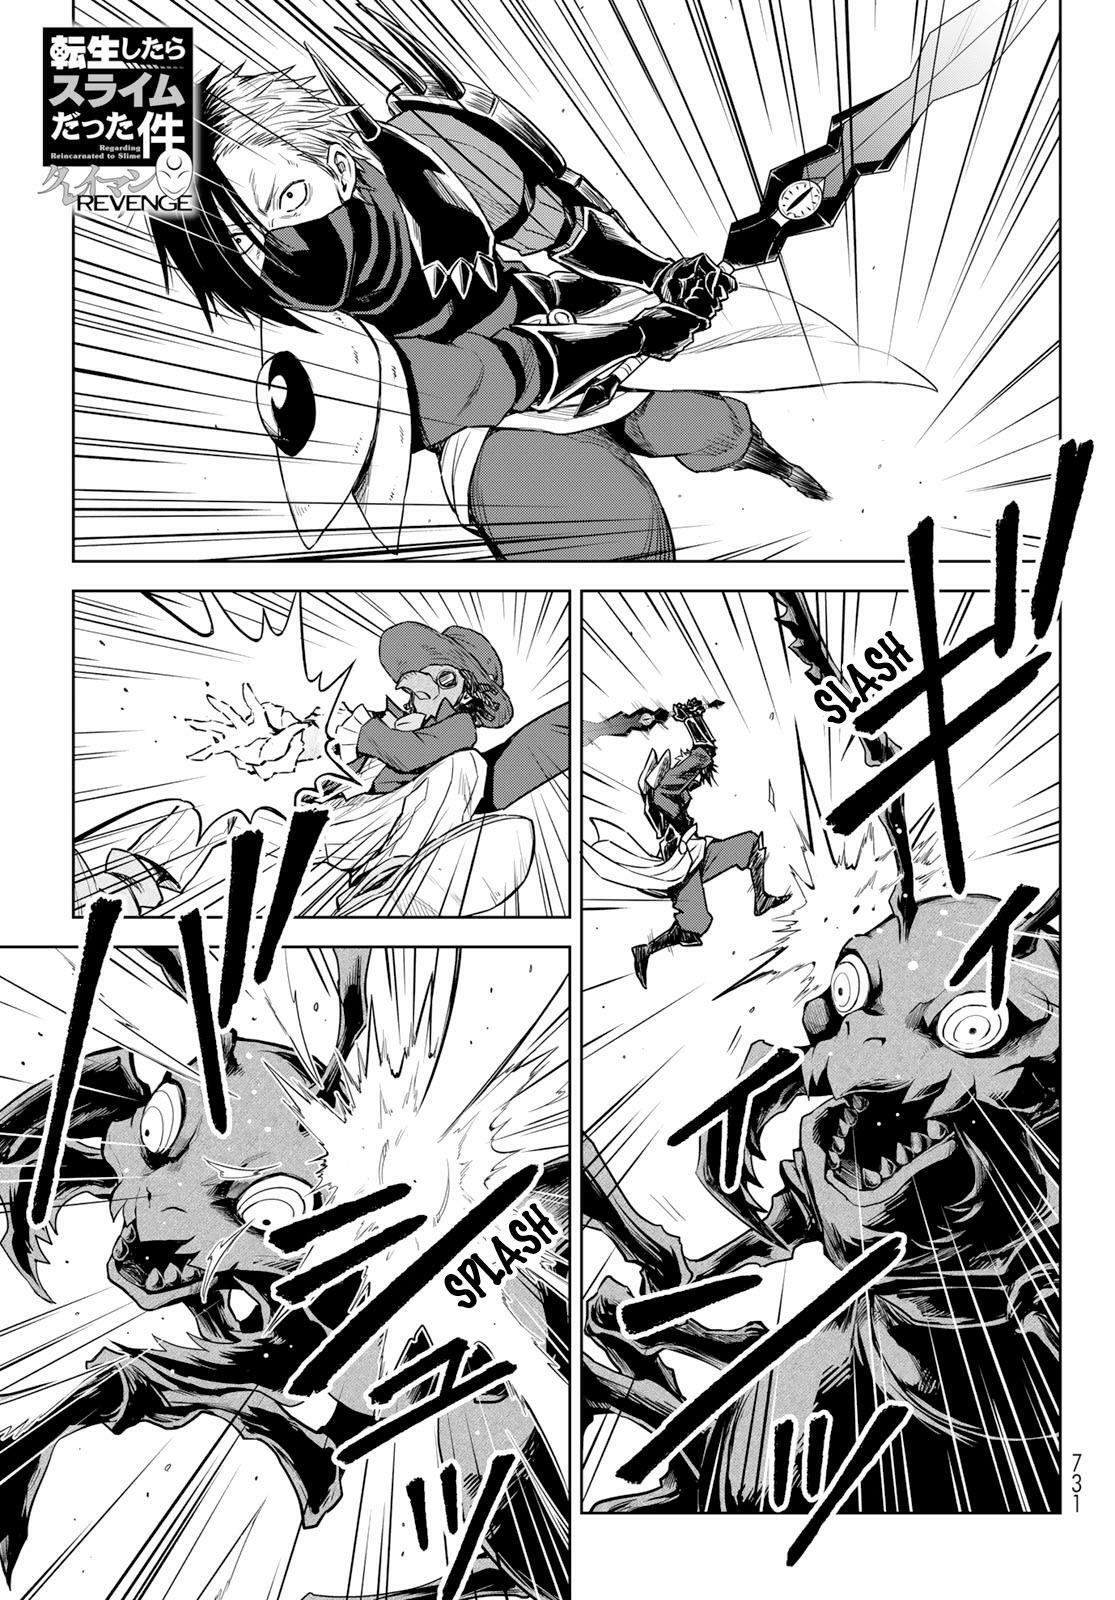 Read Tensei Shitara Slime Datta Ken: Clayman Revenge Vol.3 Chapter 13:  Showcase on Mangakakalot